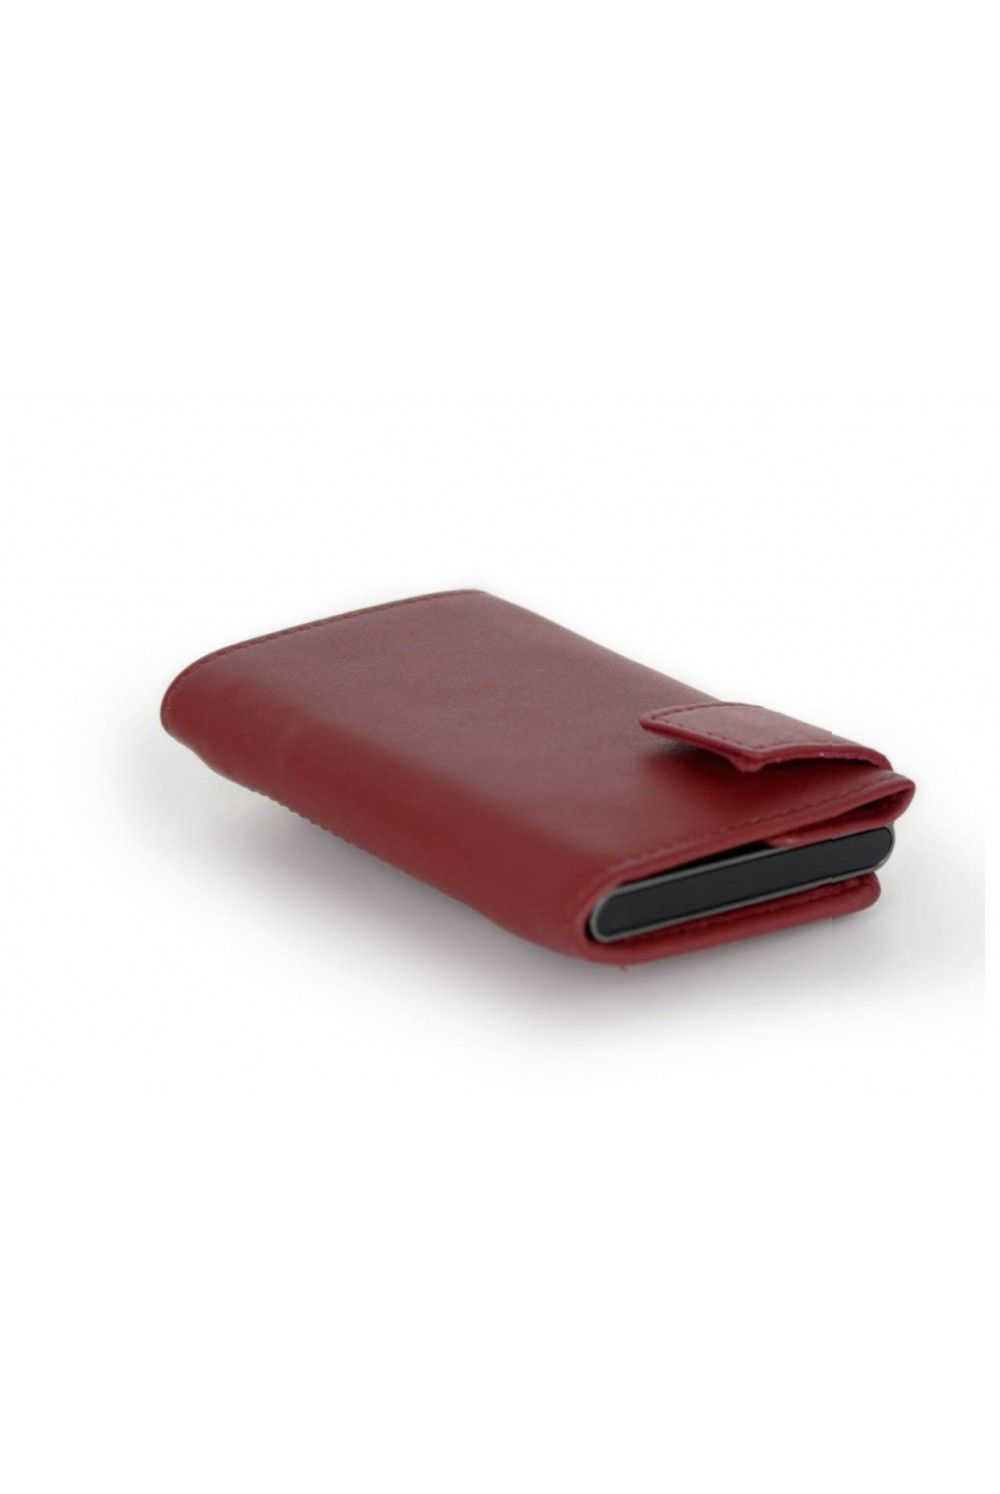 SecWal Card Case XL RV Leather Red